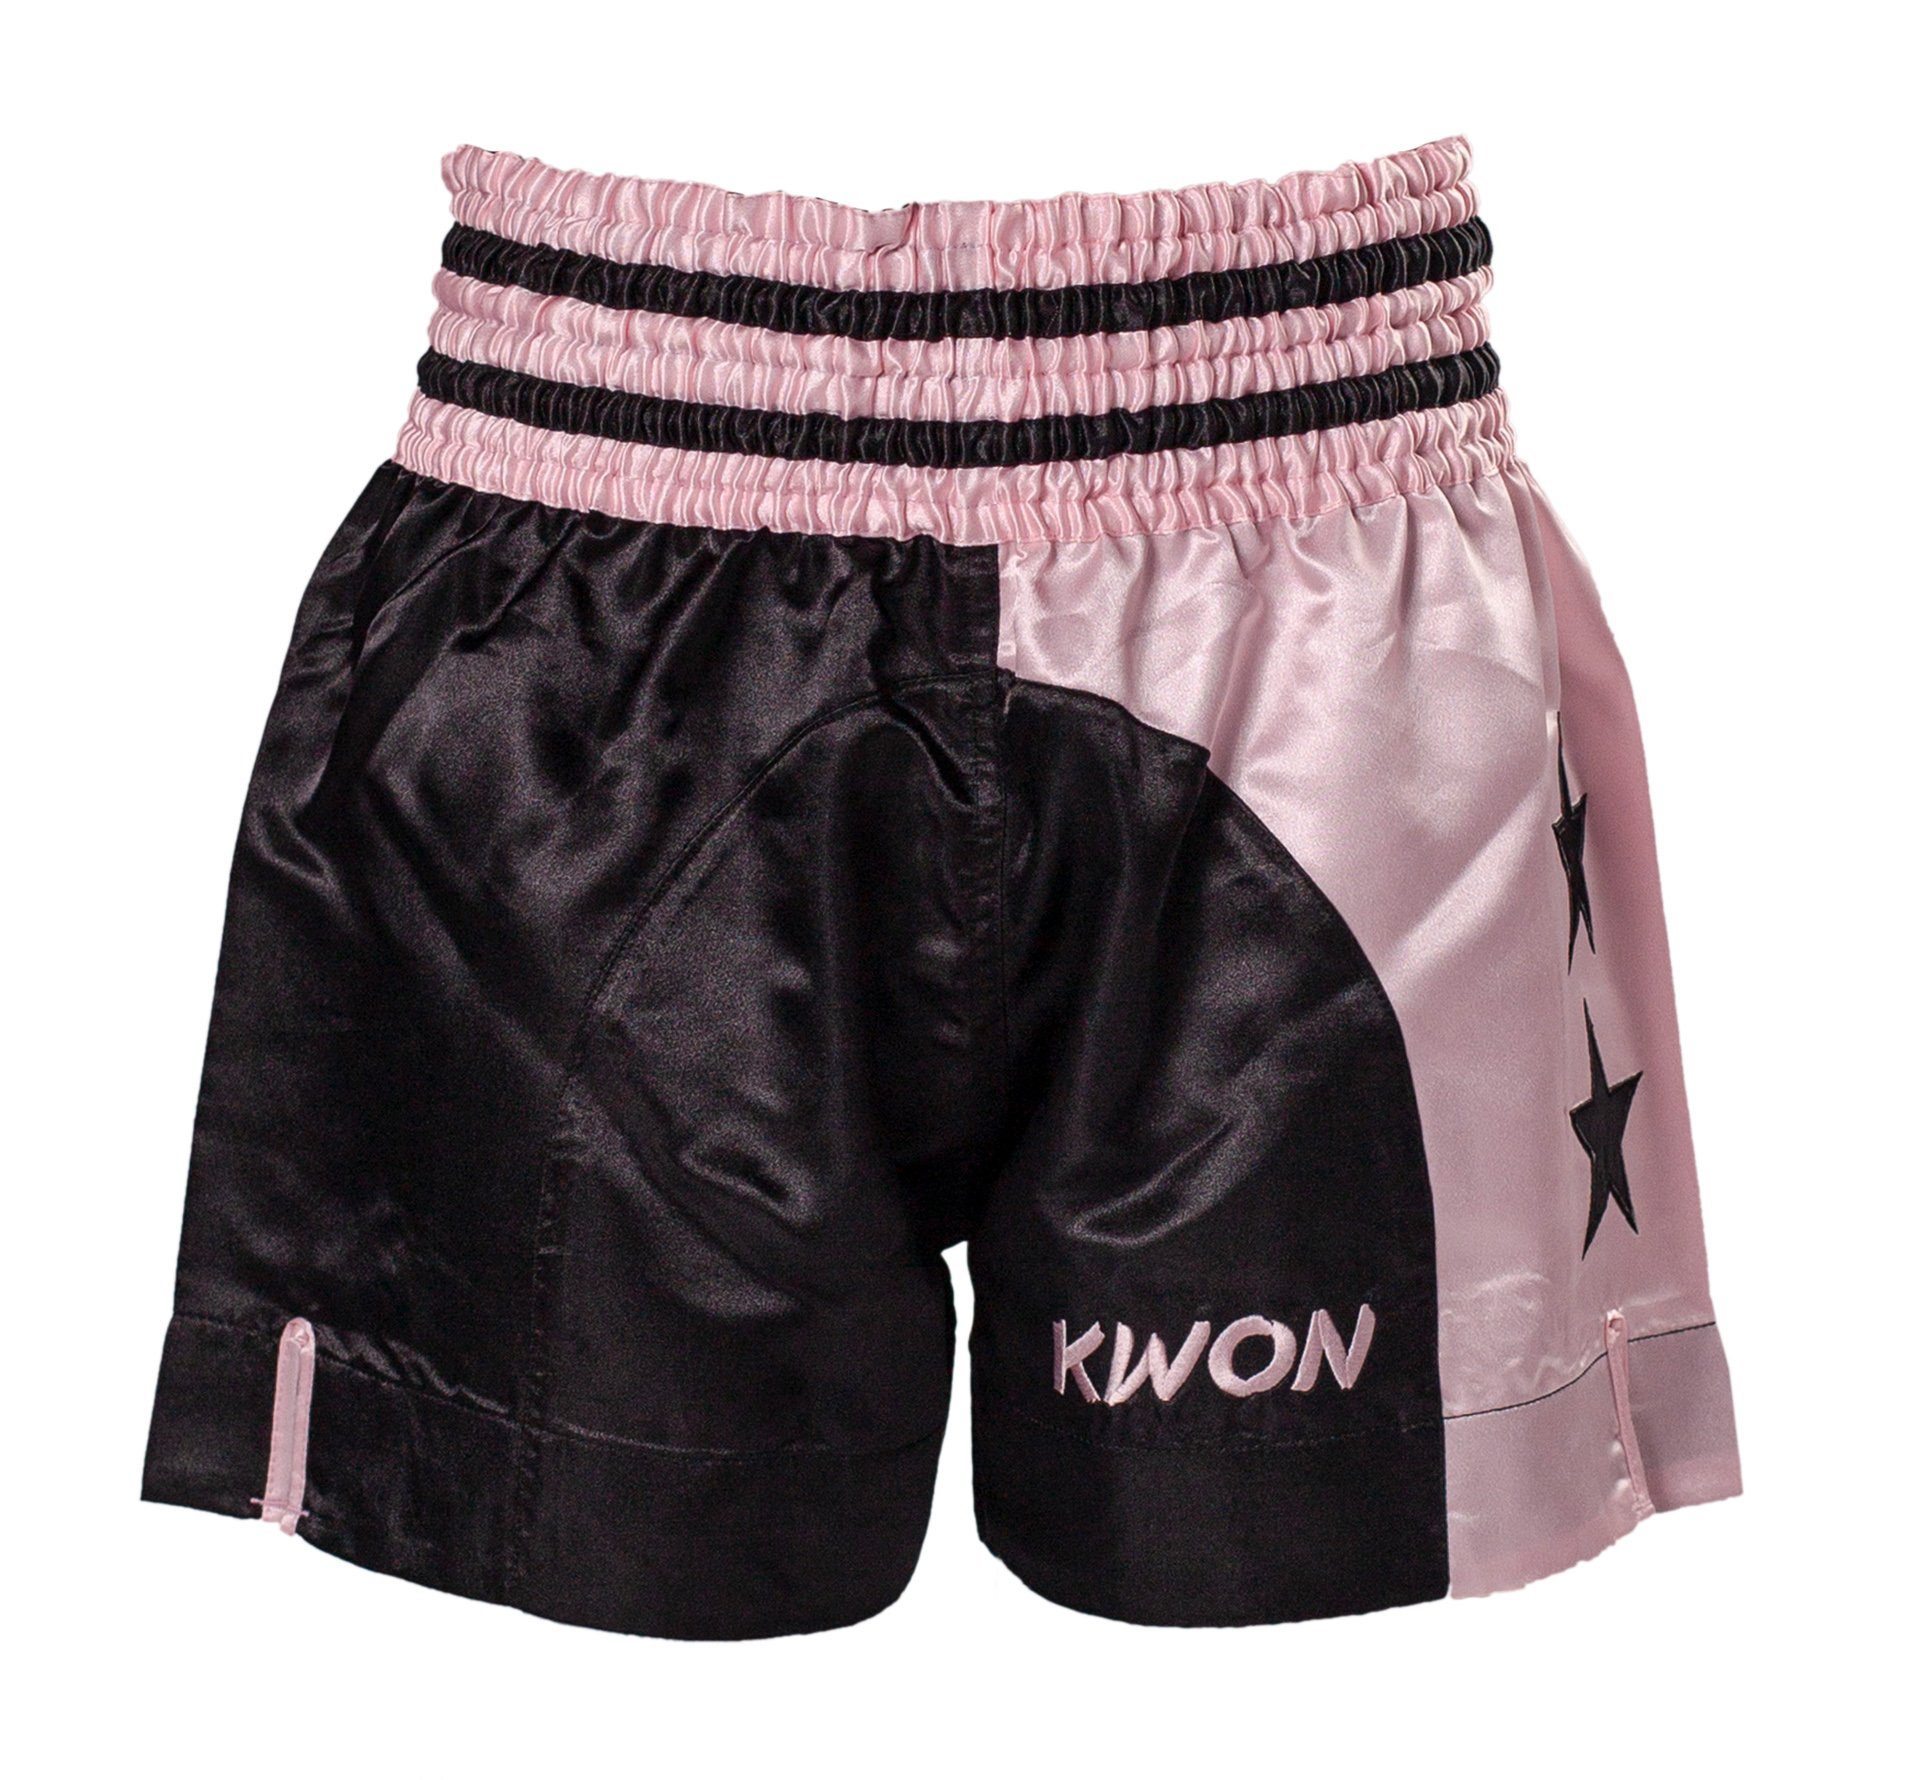 KWON Sporthose Thaiboxhose Damen Muay Thai Box Шорти Kickboxhose kurz pink rosa MMA (Edler Look) traditioneller Schnitt, Sterne